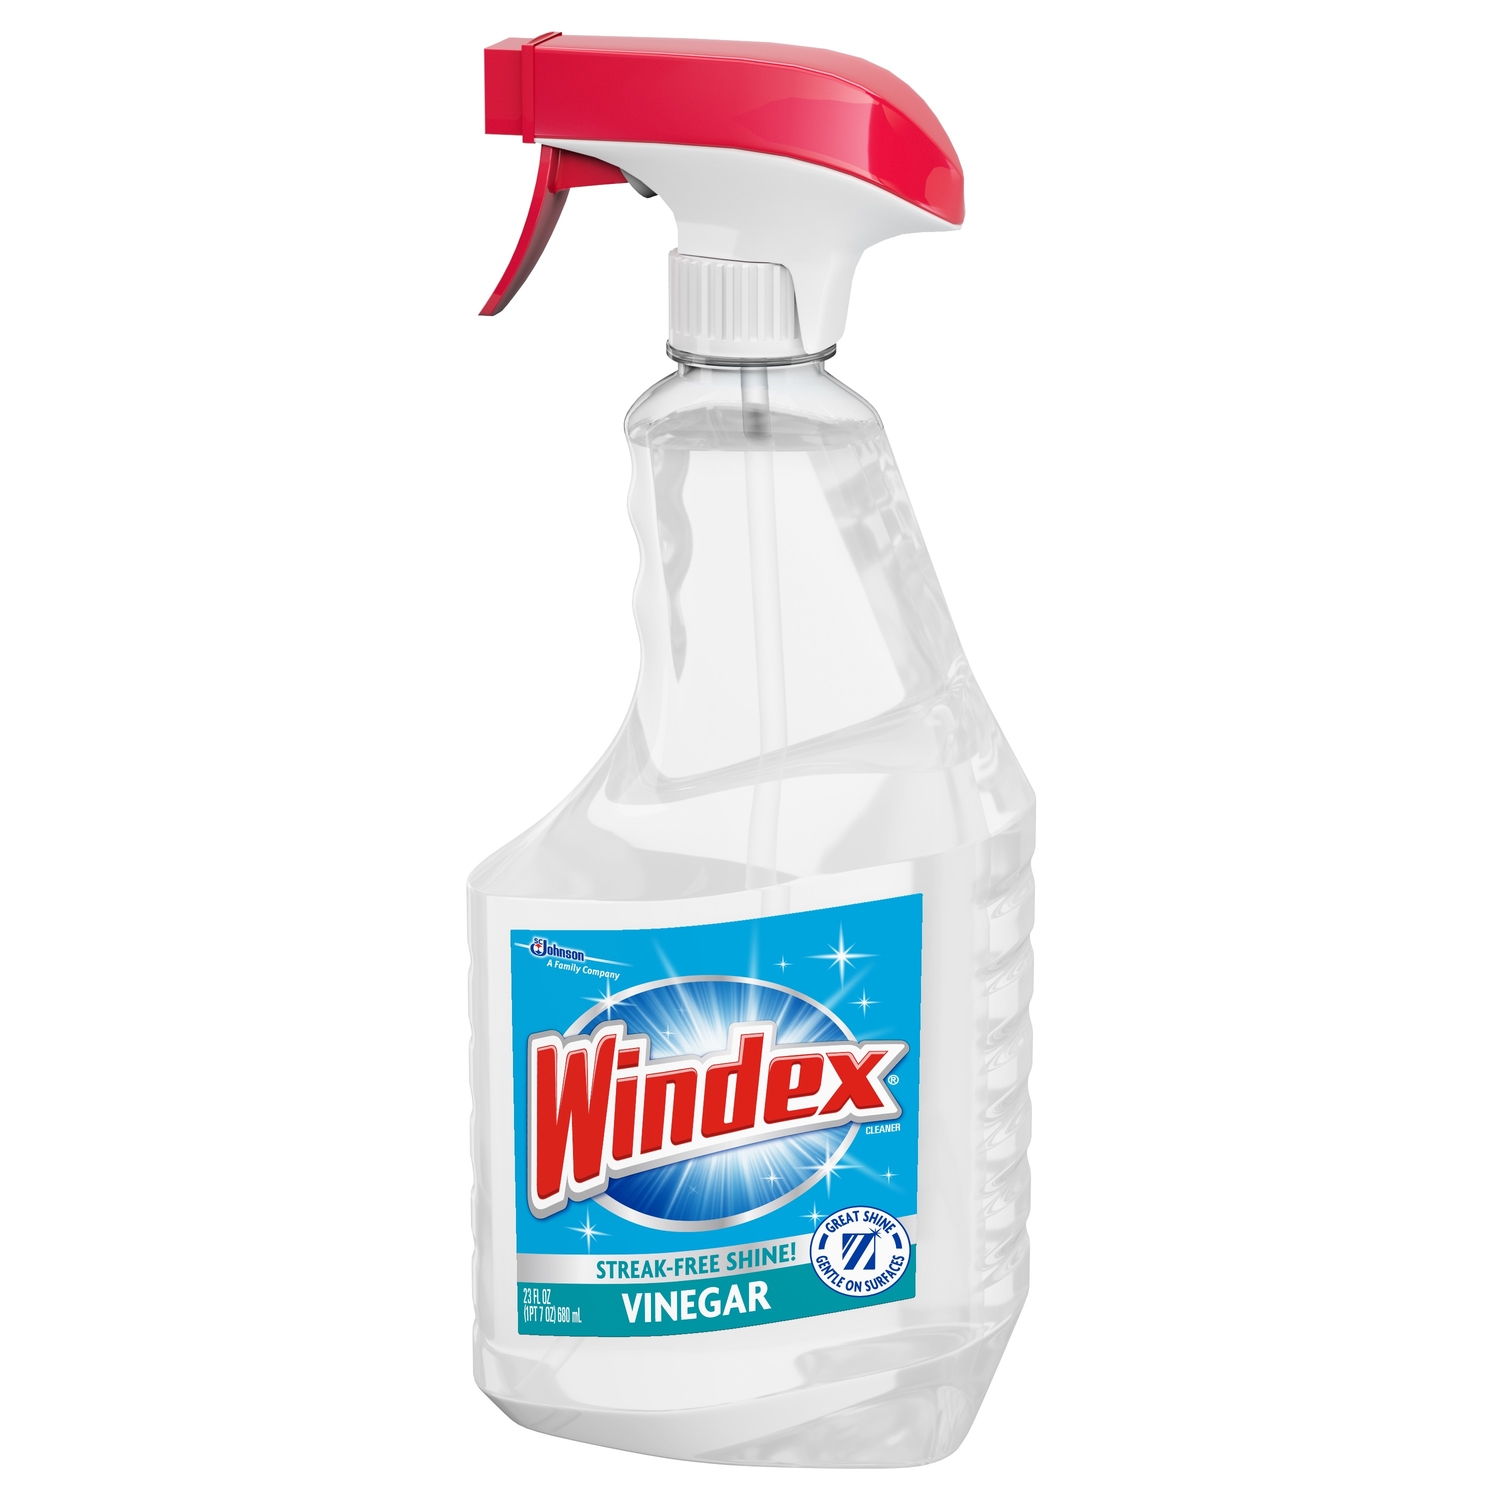 Windex Glass Cleaner with Vinegar Trigger Bottle, 23 fl oz